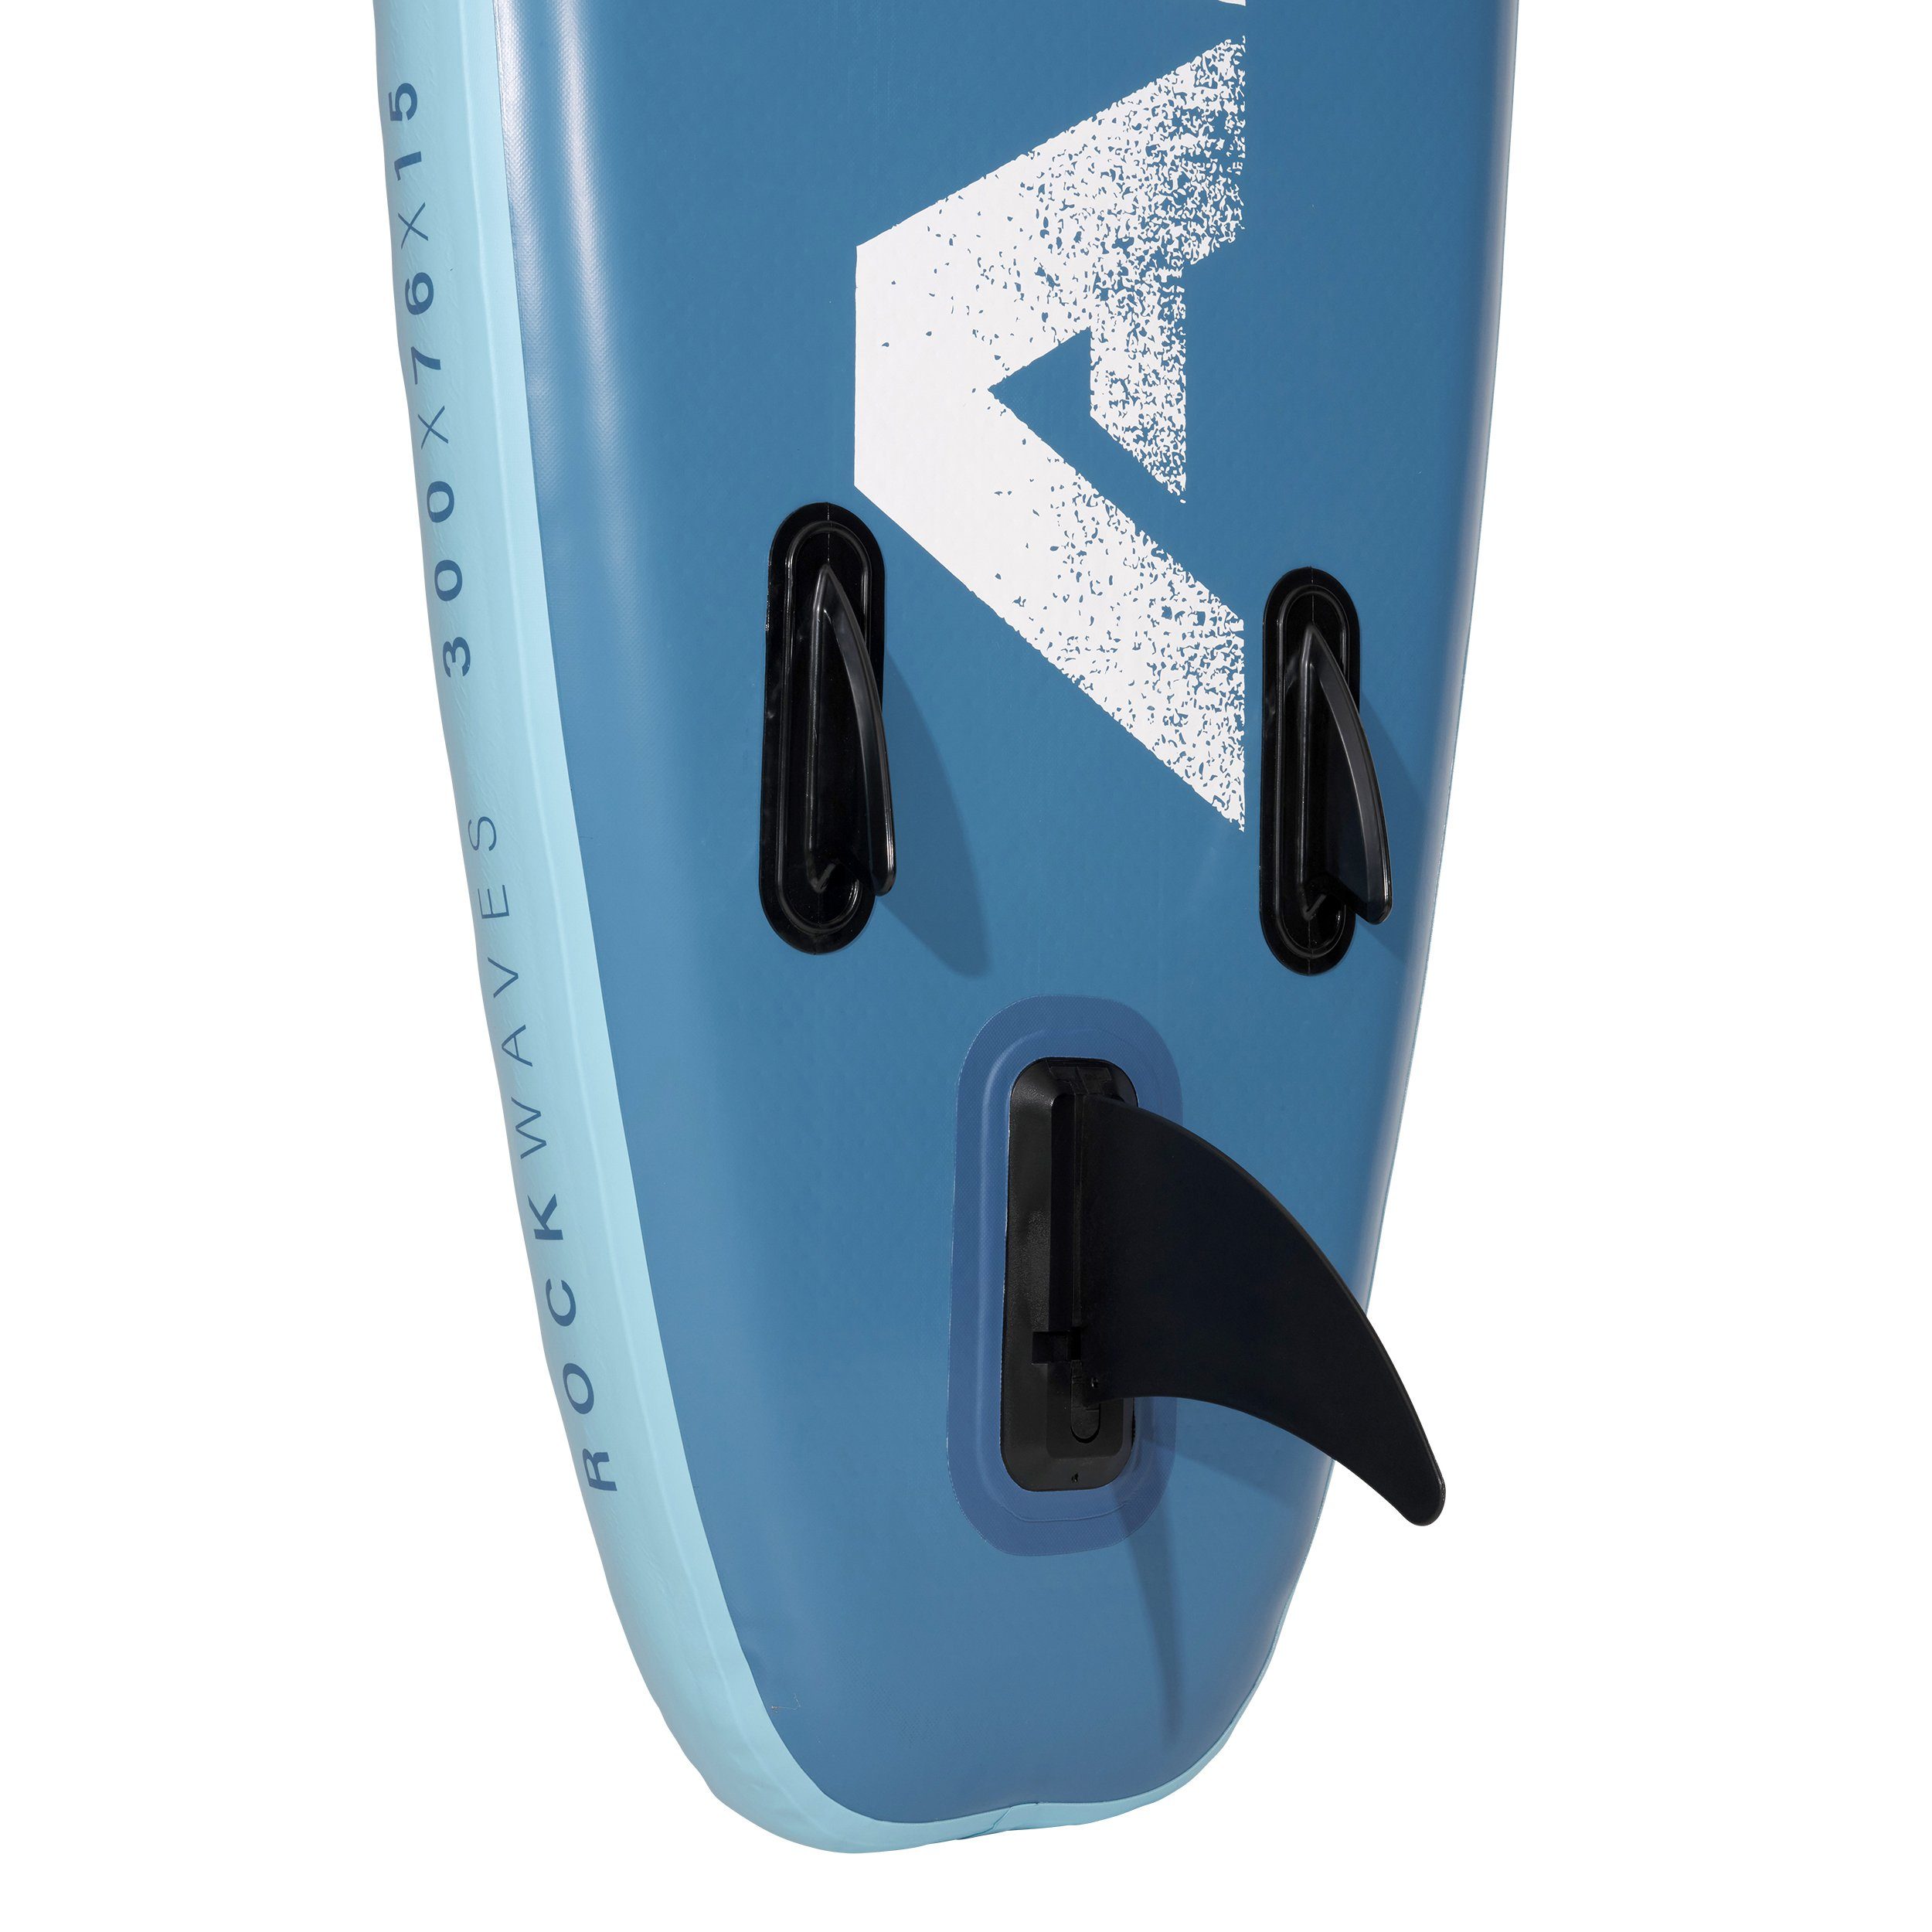 Apollo Inflatable SUP-Board Aufblasbares SUP Paddle - Stand Up Shark, aufblasbar Board